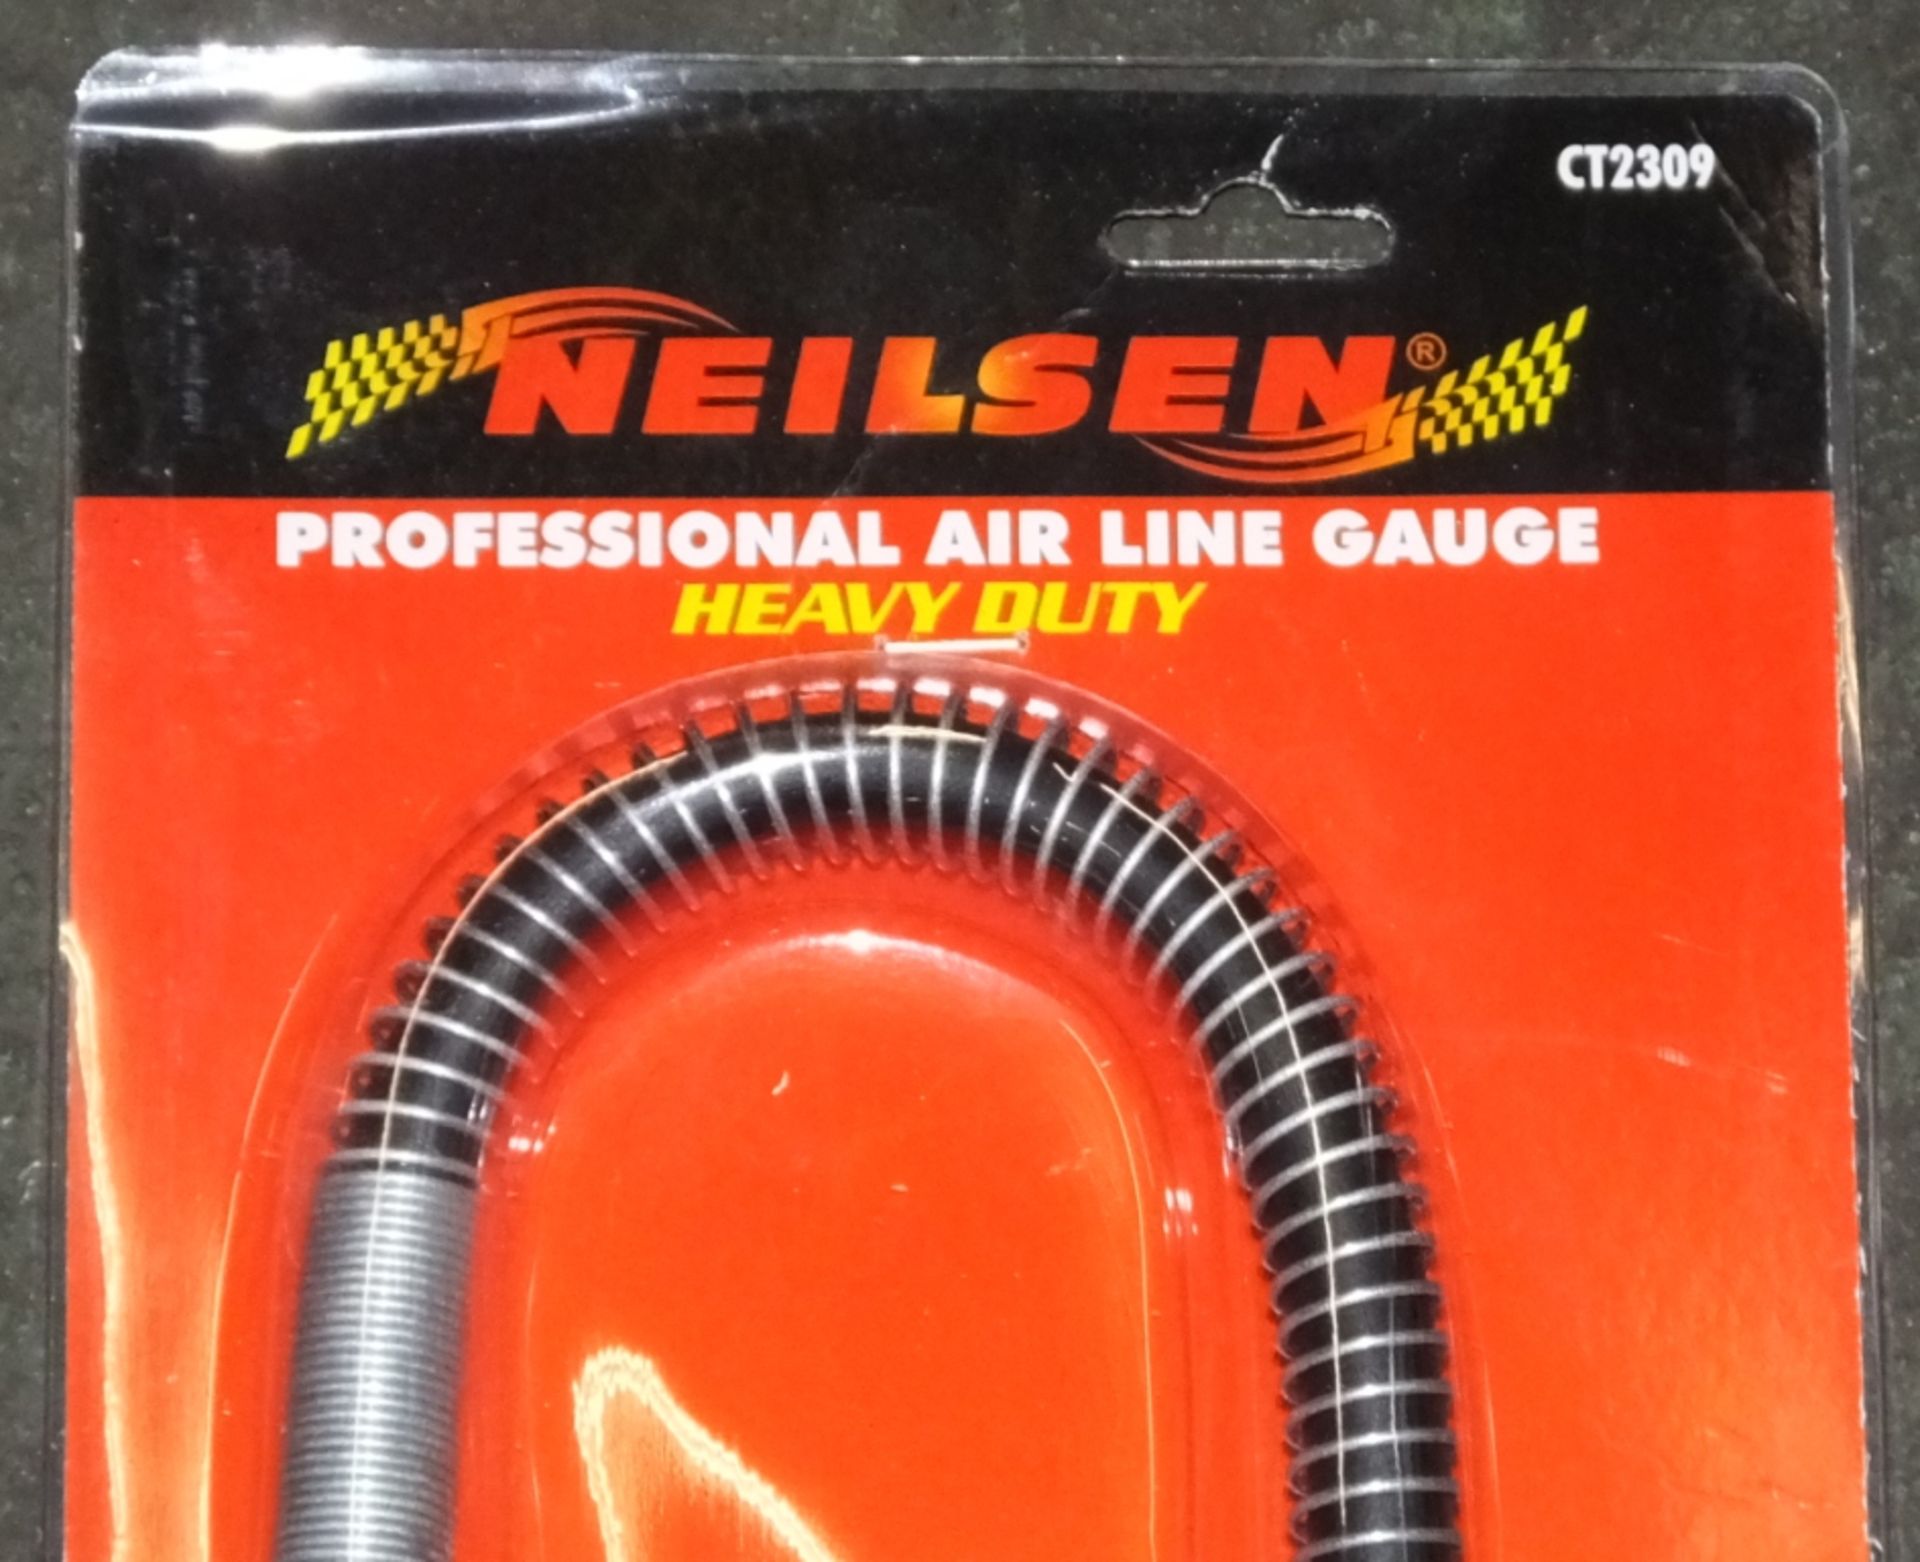 Neilsen CT2309 Air Line supply gauge - Image 2 of 2